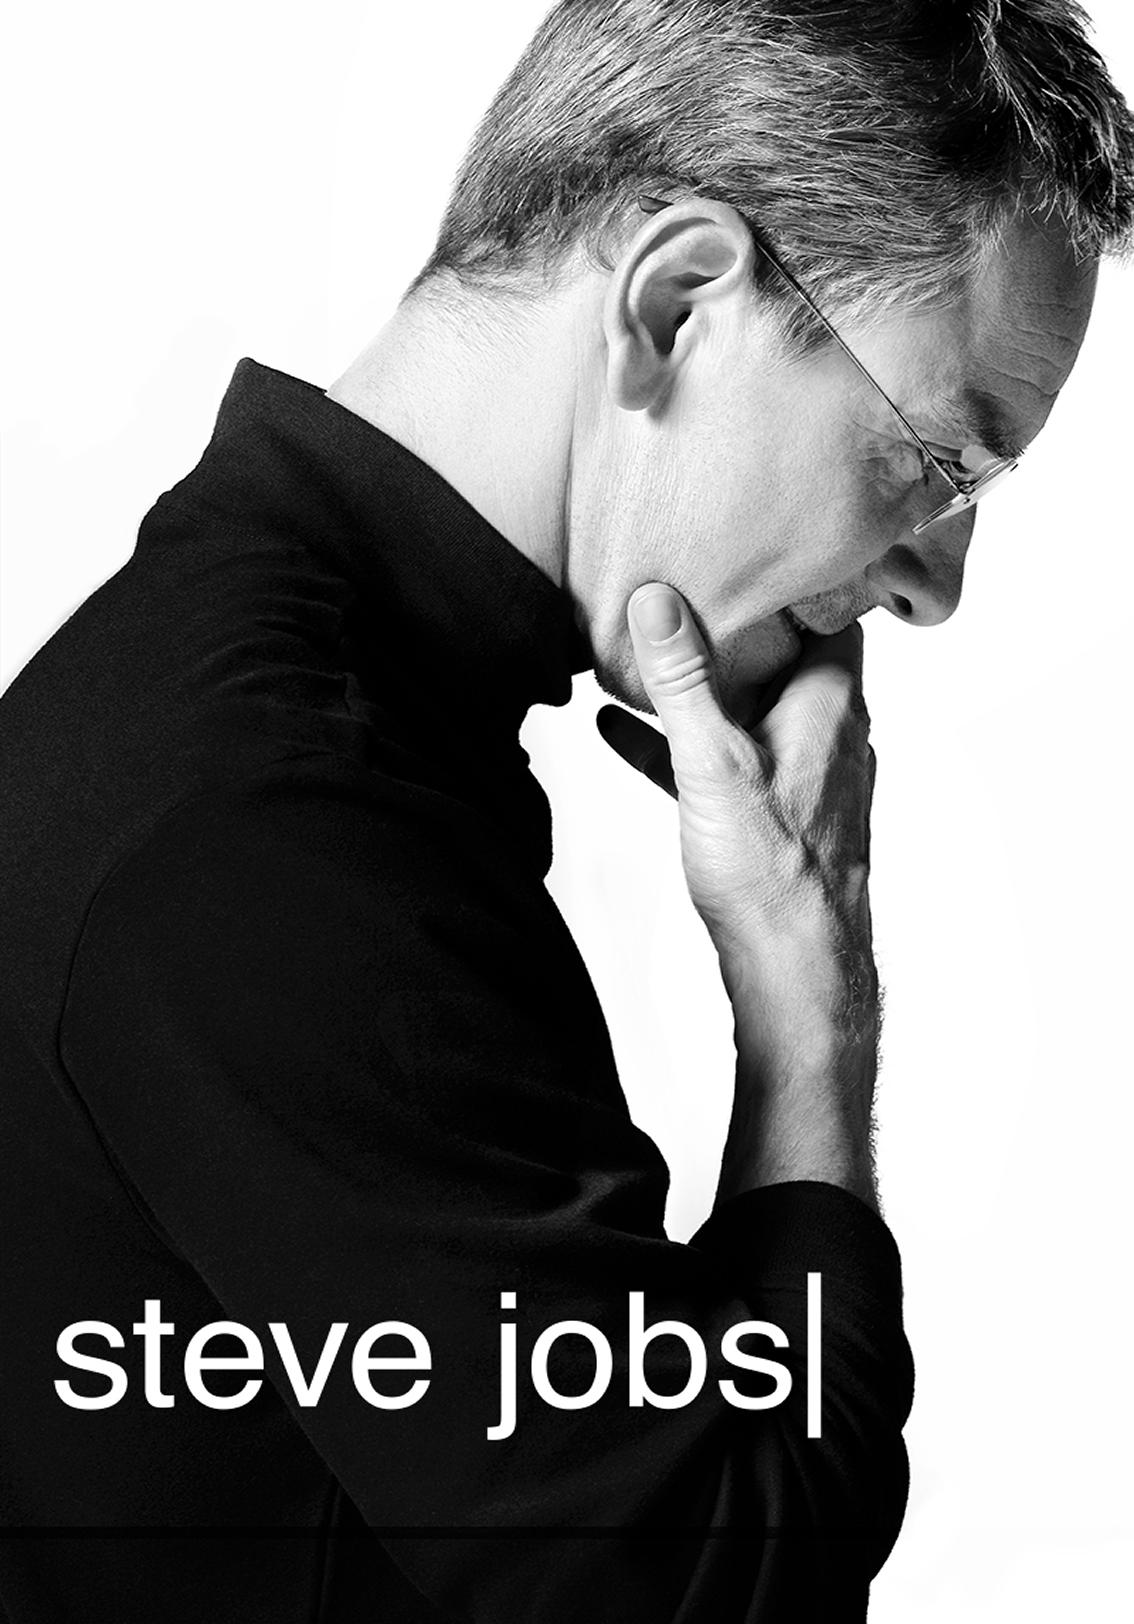 steve jobs 2015 review